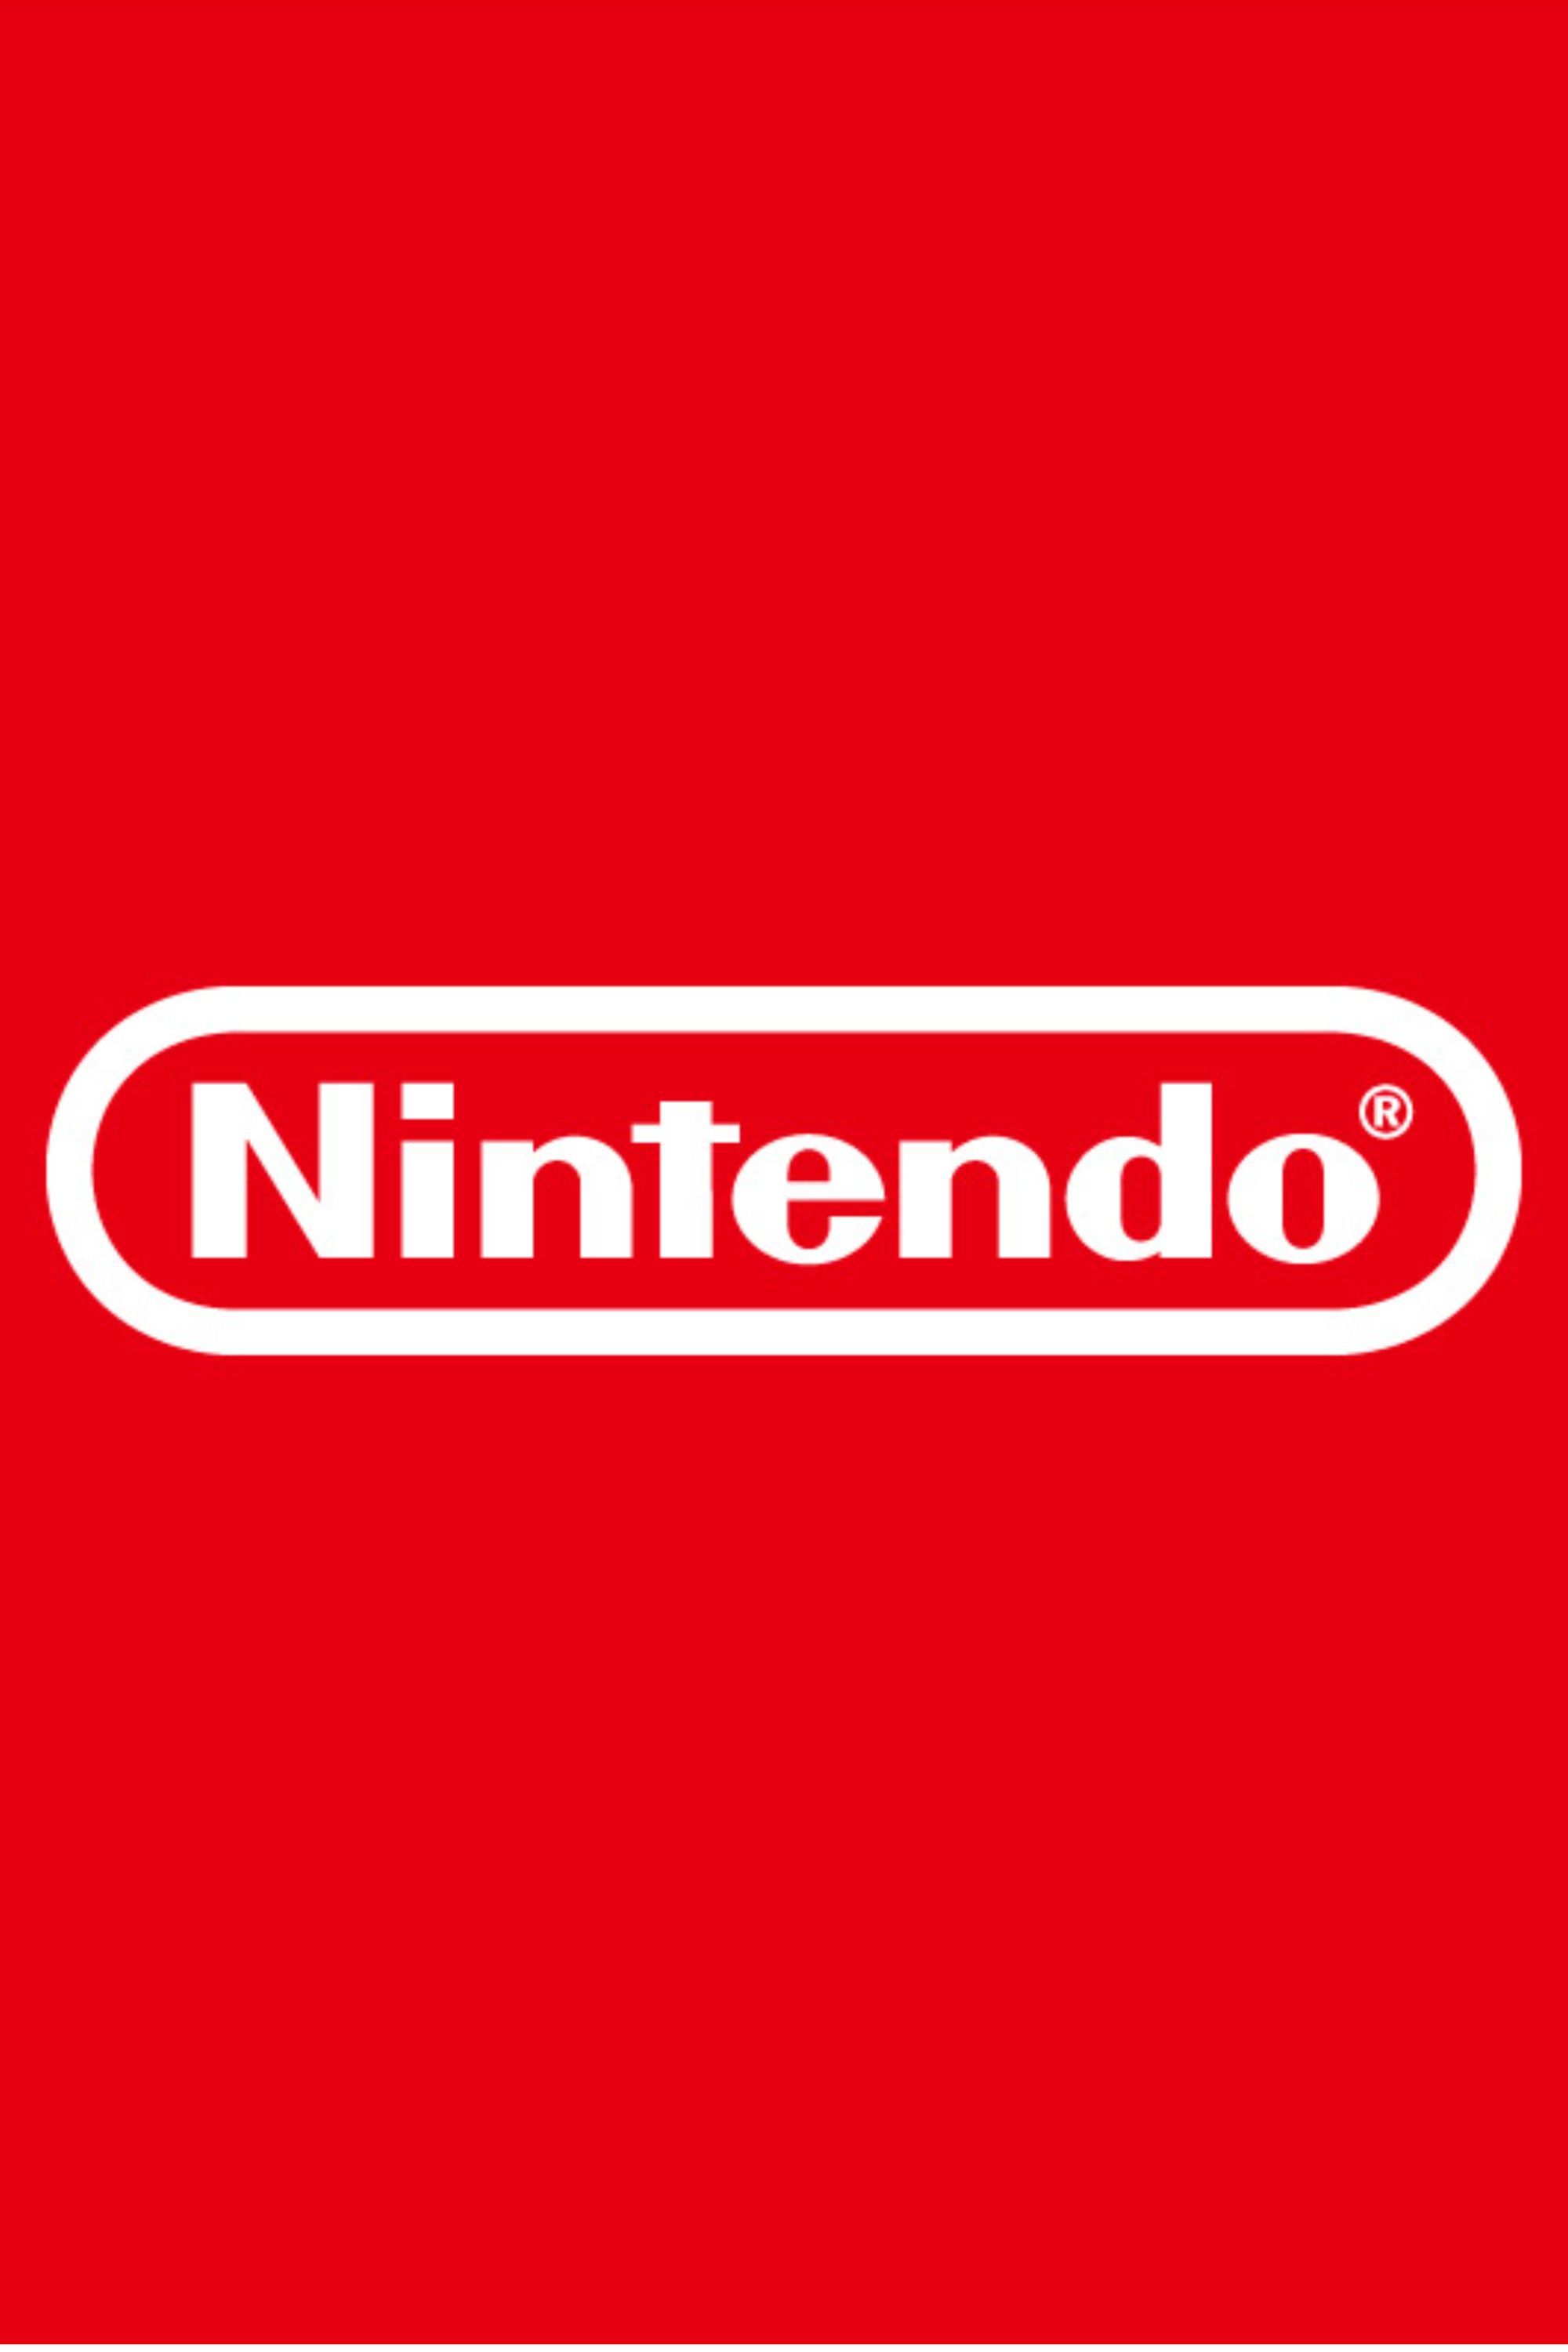 Nintendo logo tag image